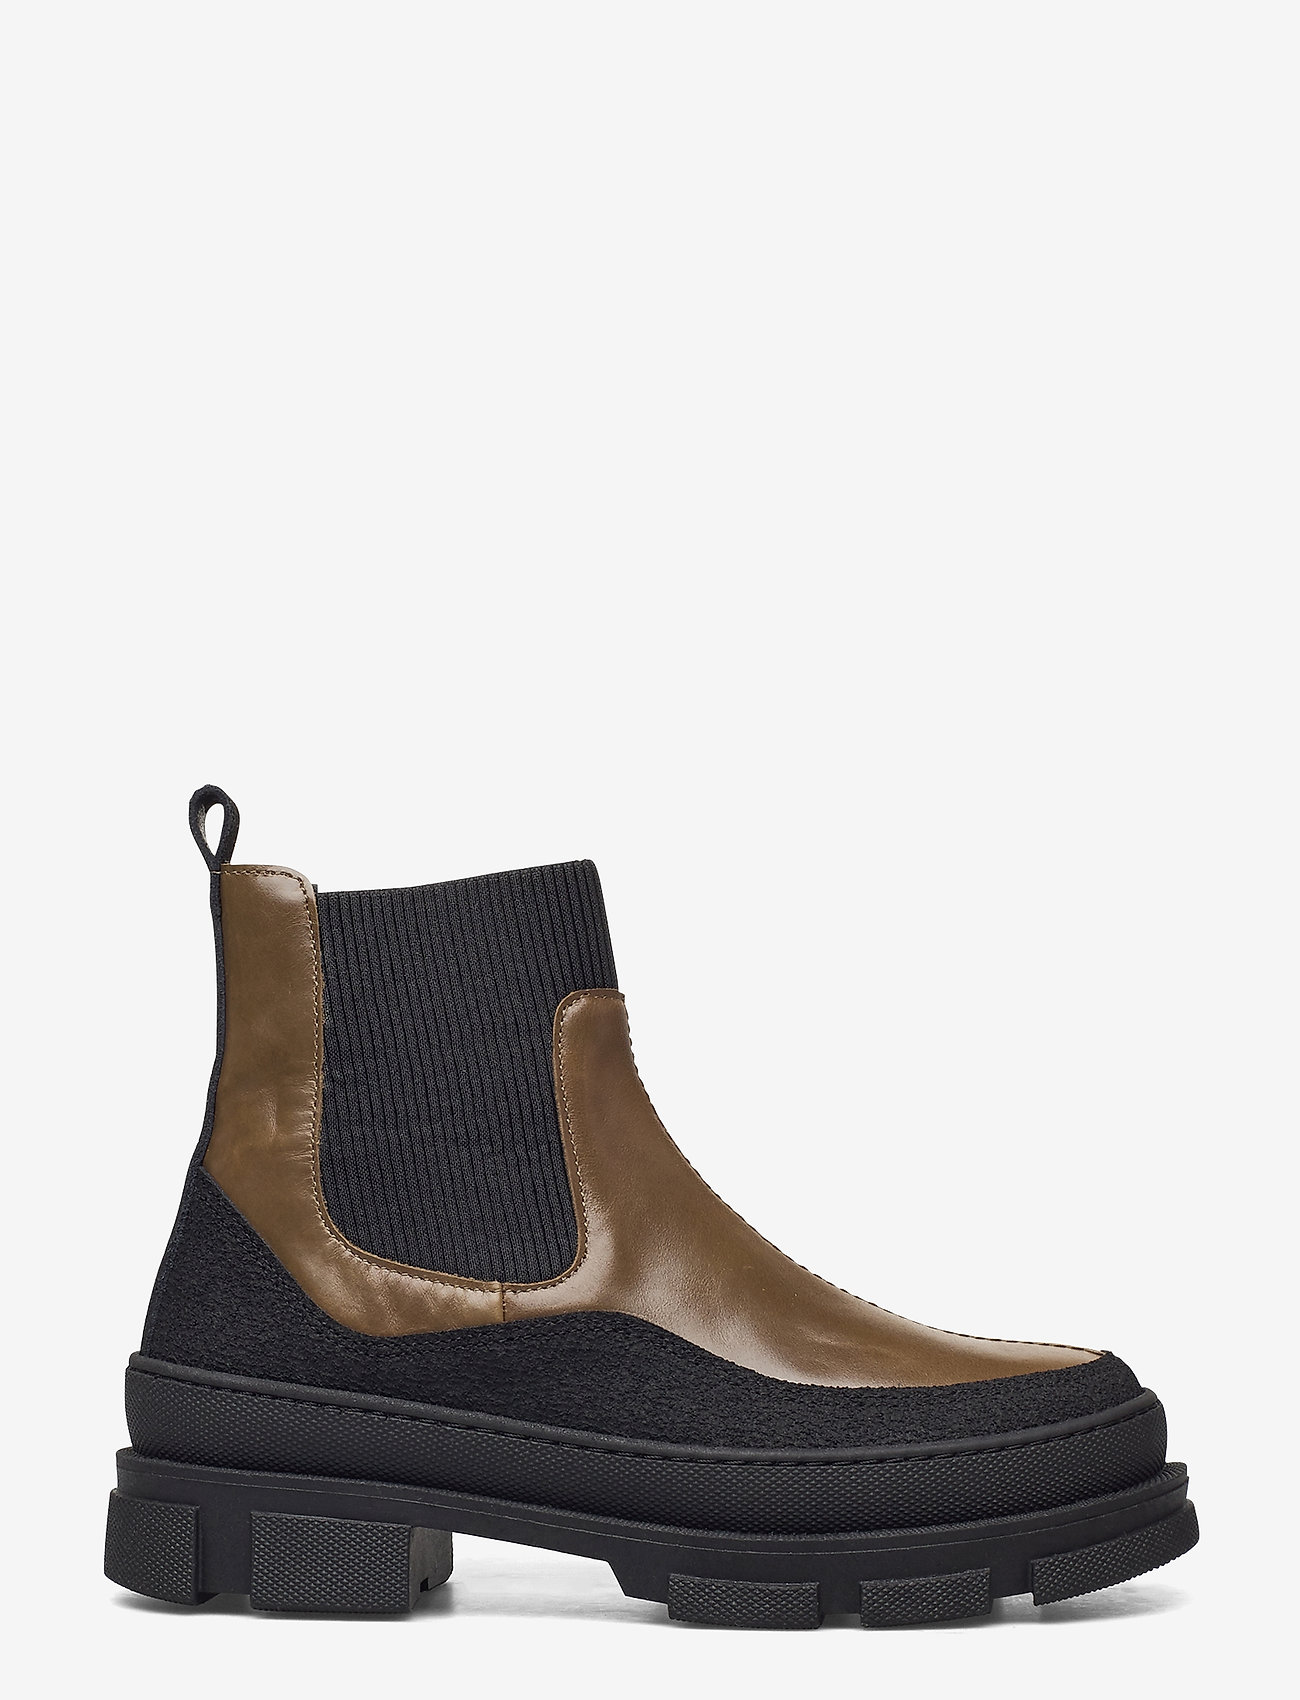 ANGULUS - Boots - flat - chelsea boots - 1321/1841/019  black/d. oliven - 1